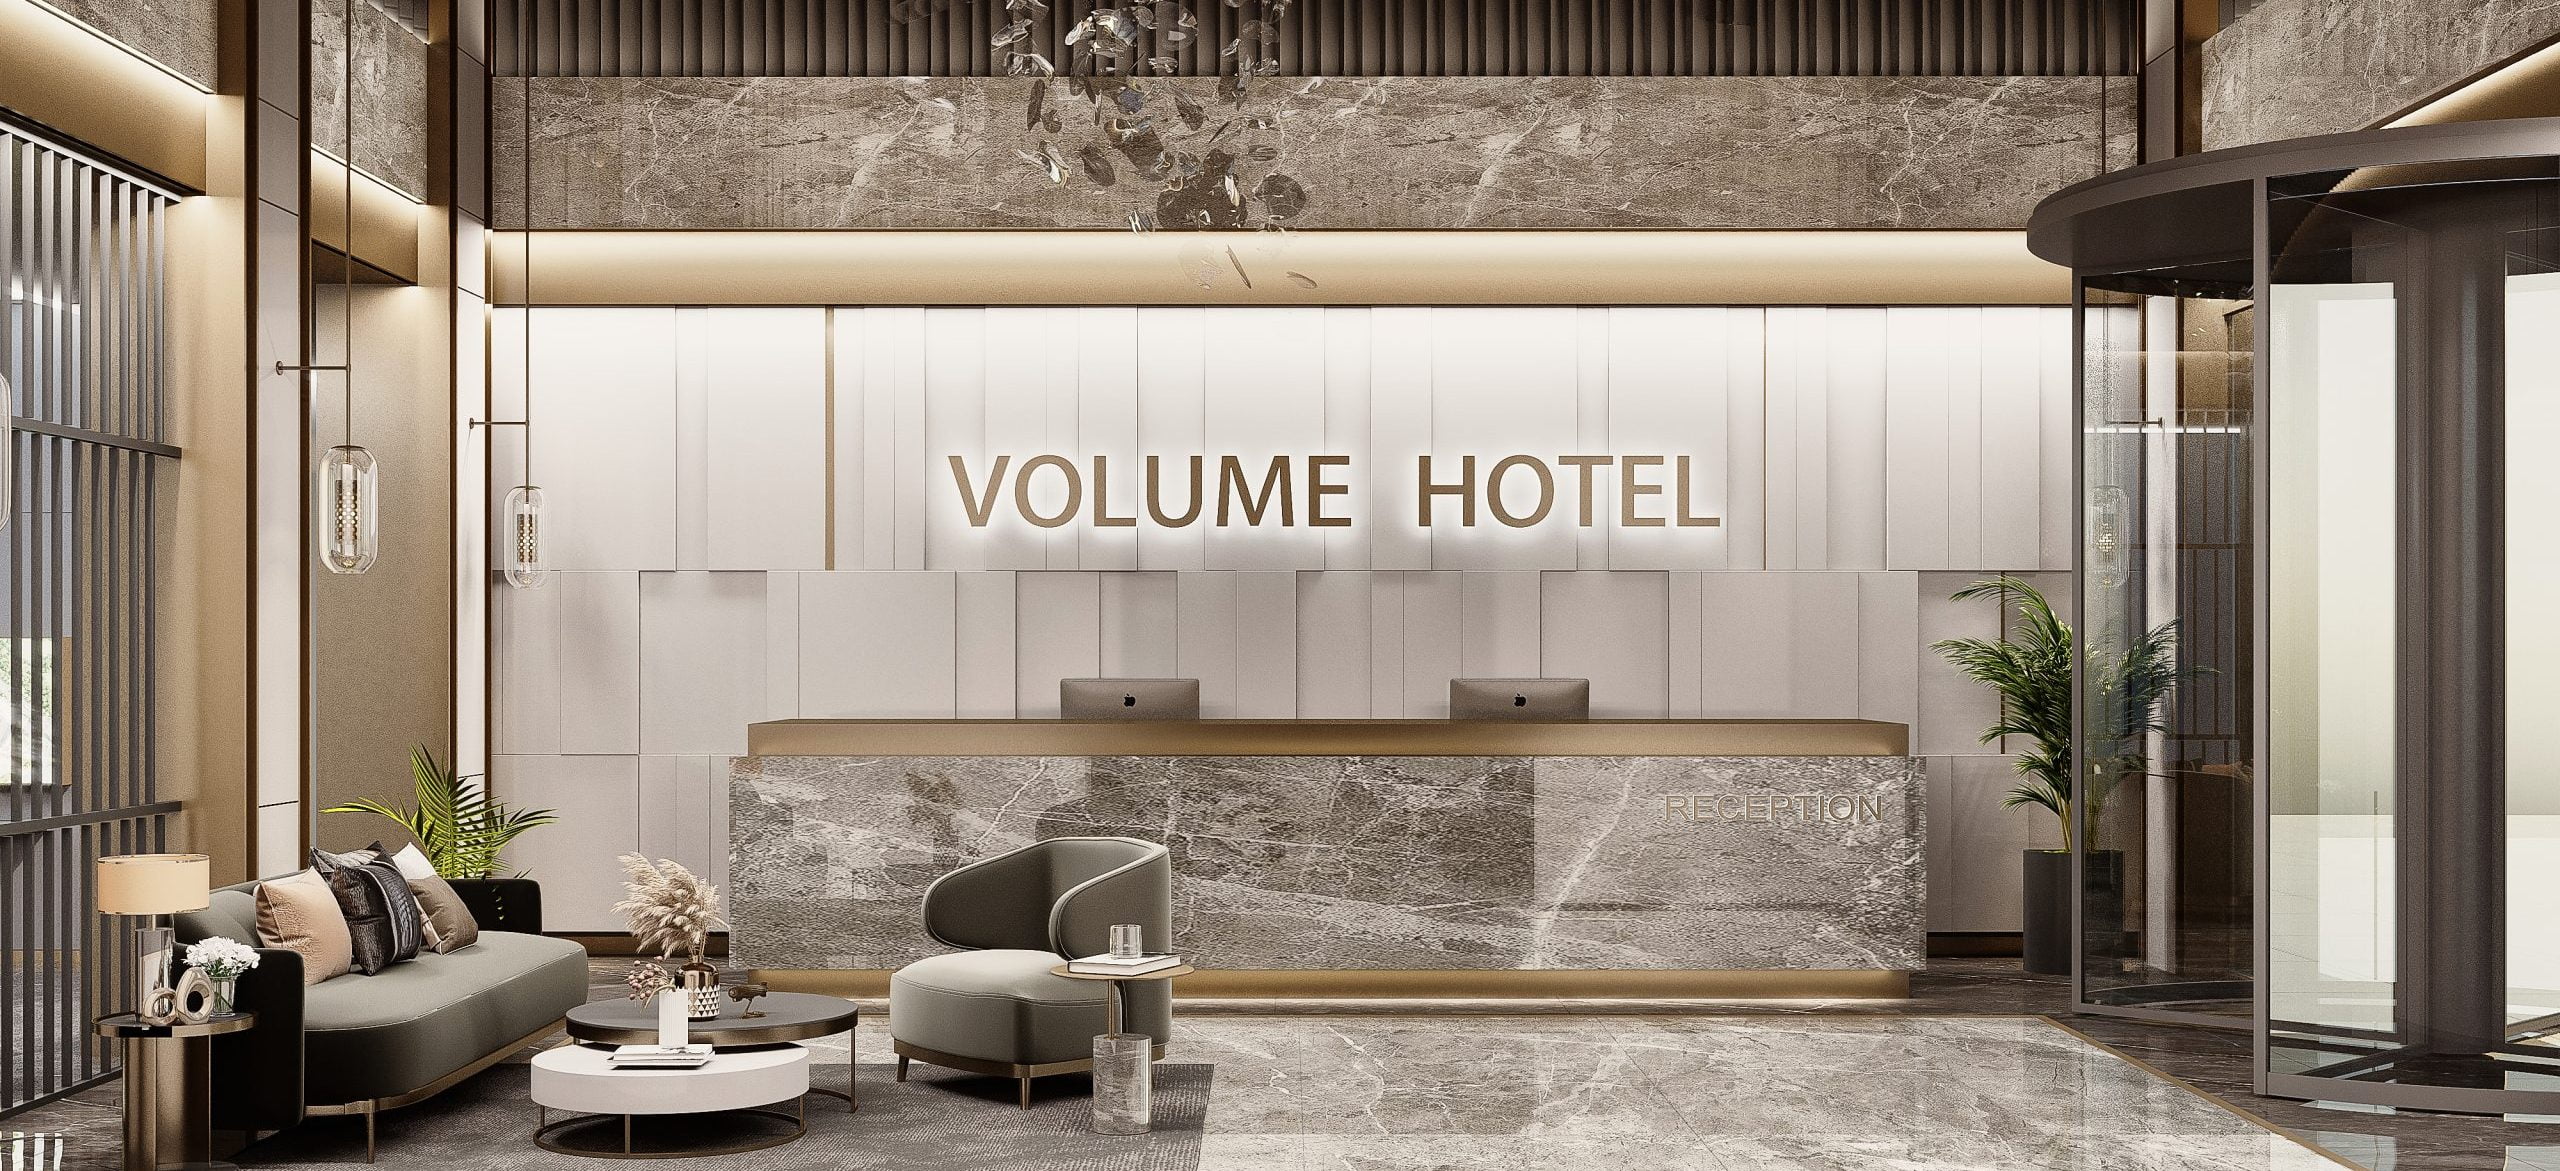 Volume Hotel